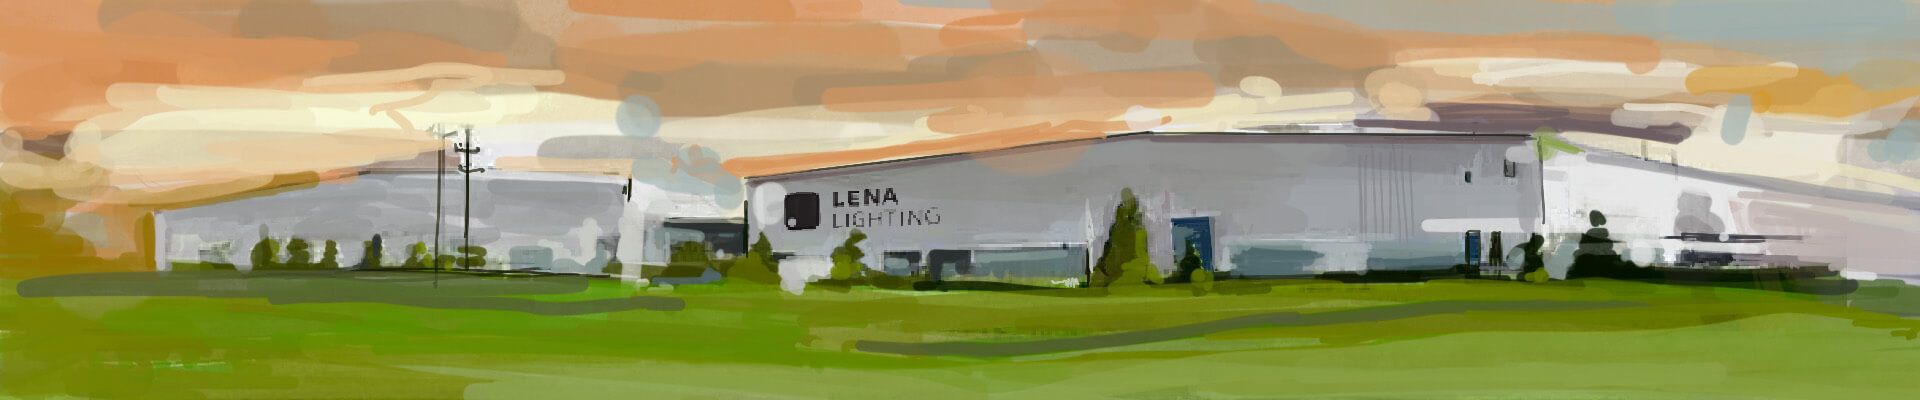 Lena Lighting- factory and warehous